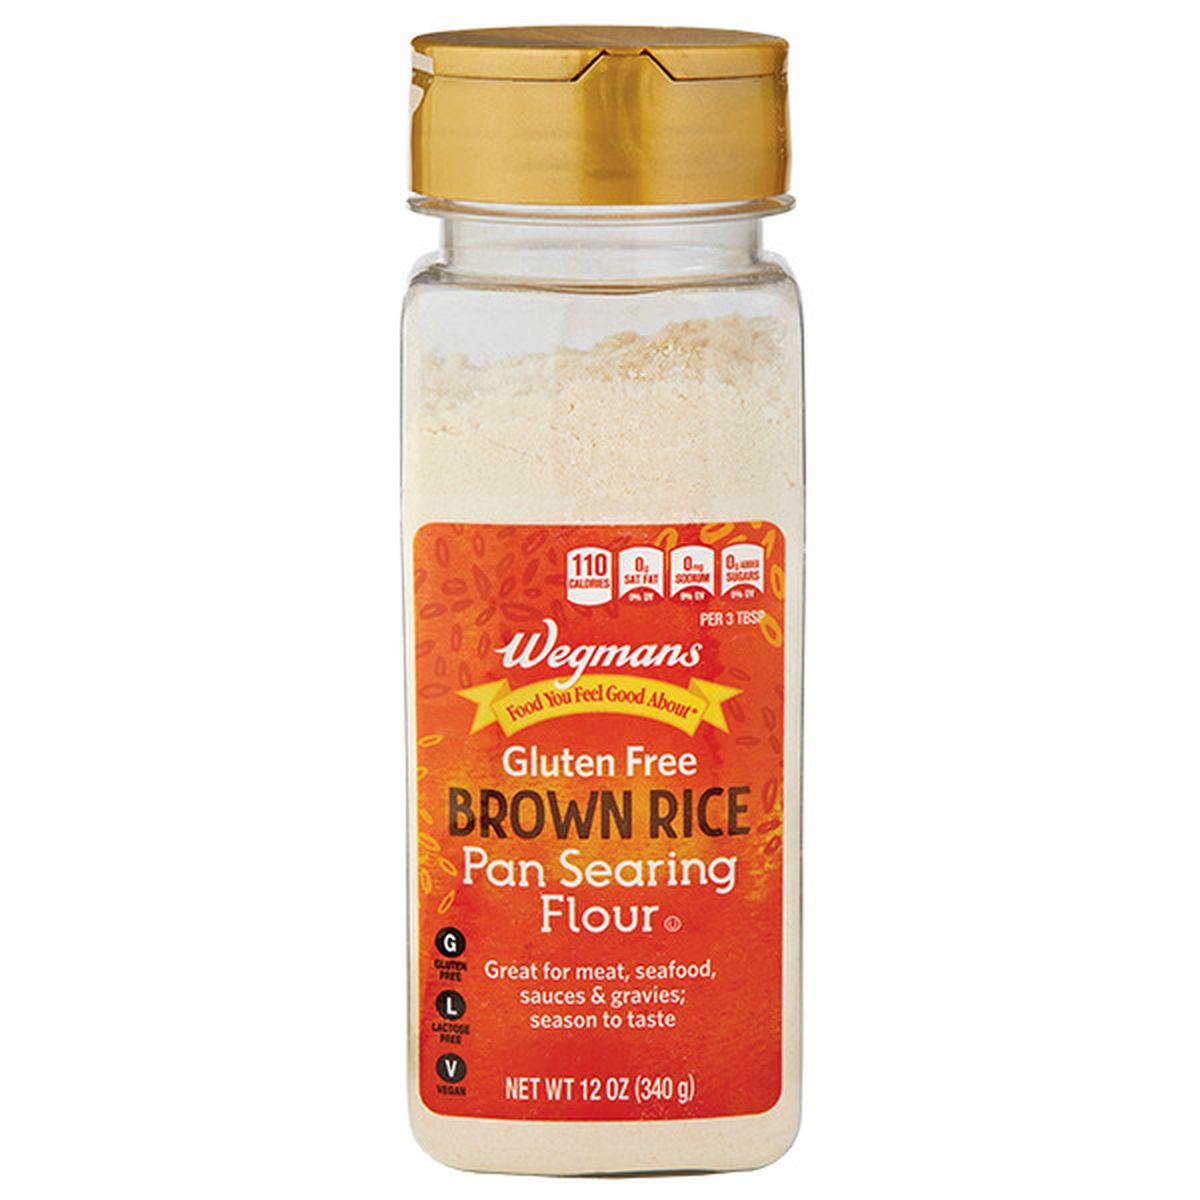 Calories in Wegmans Gluten Free Brown Rice Pan Searing Flour